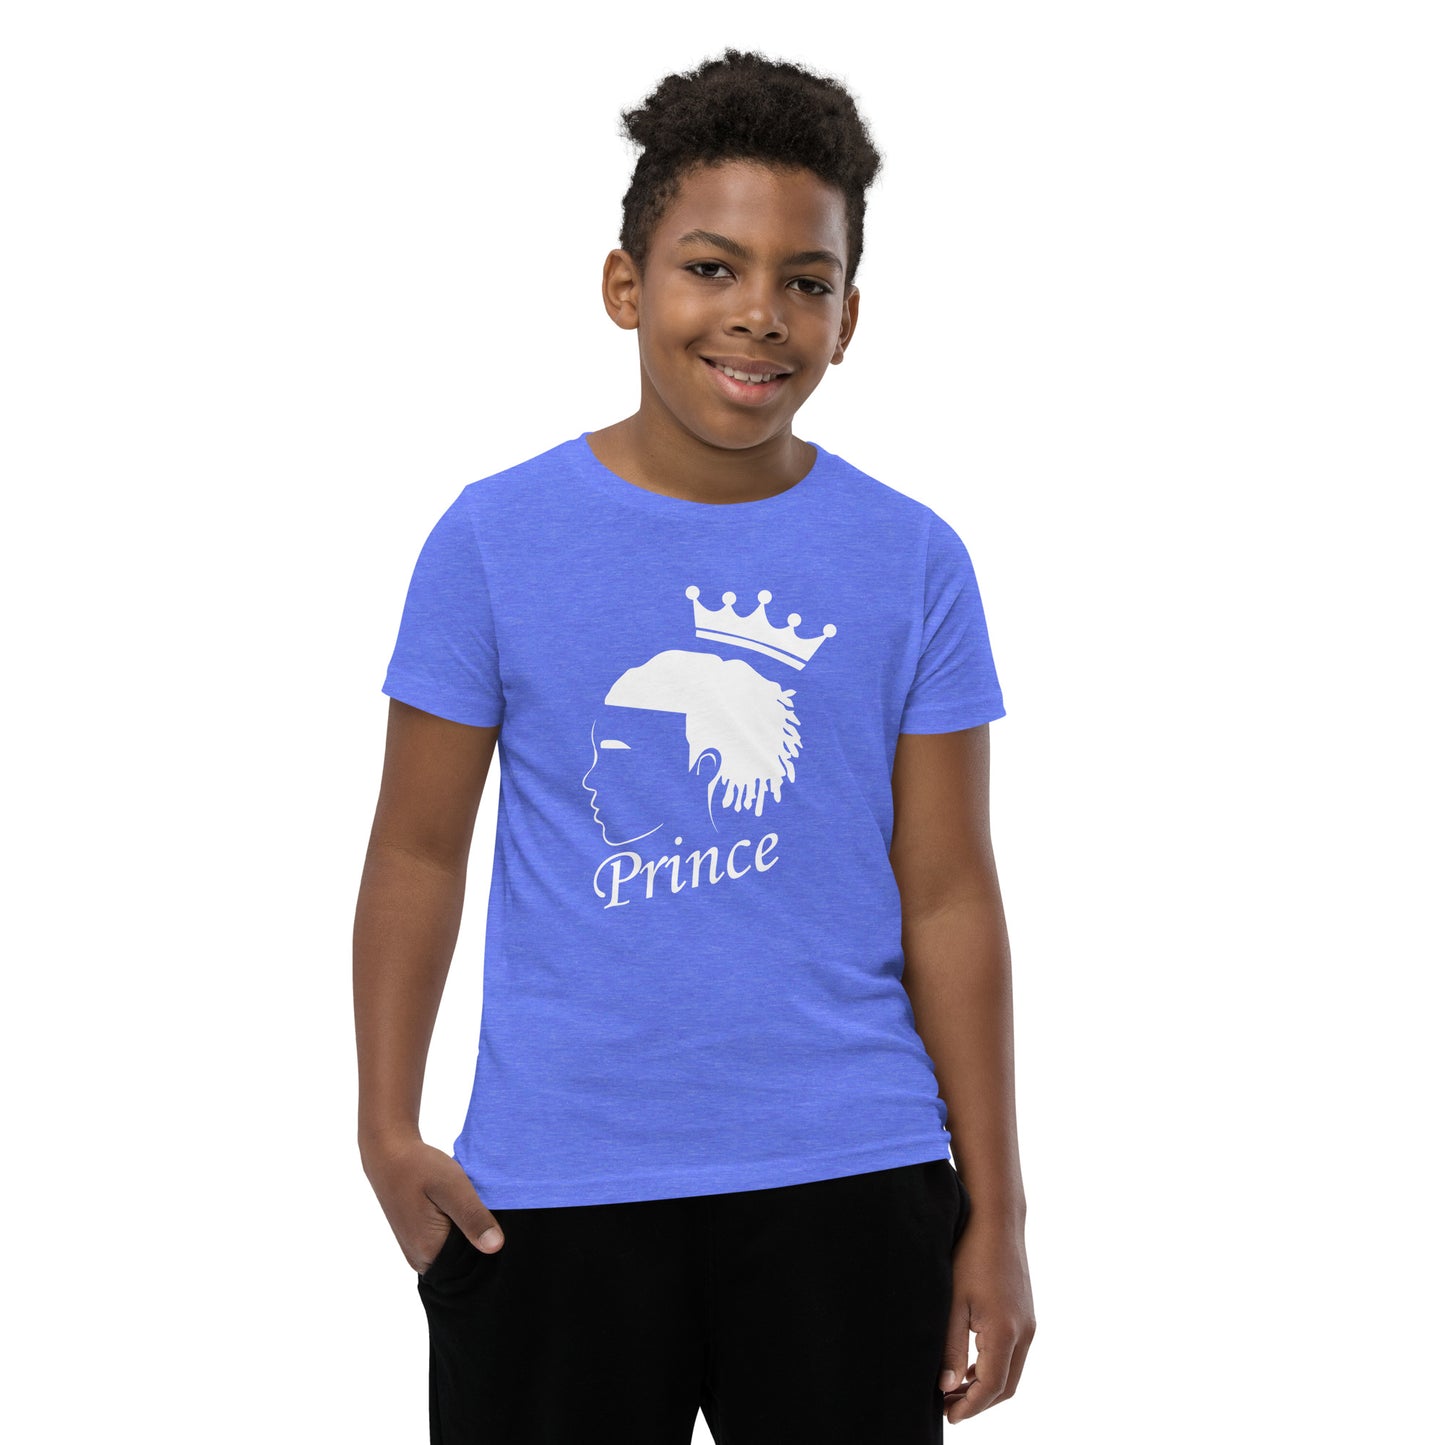 The Prince T-Shirt